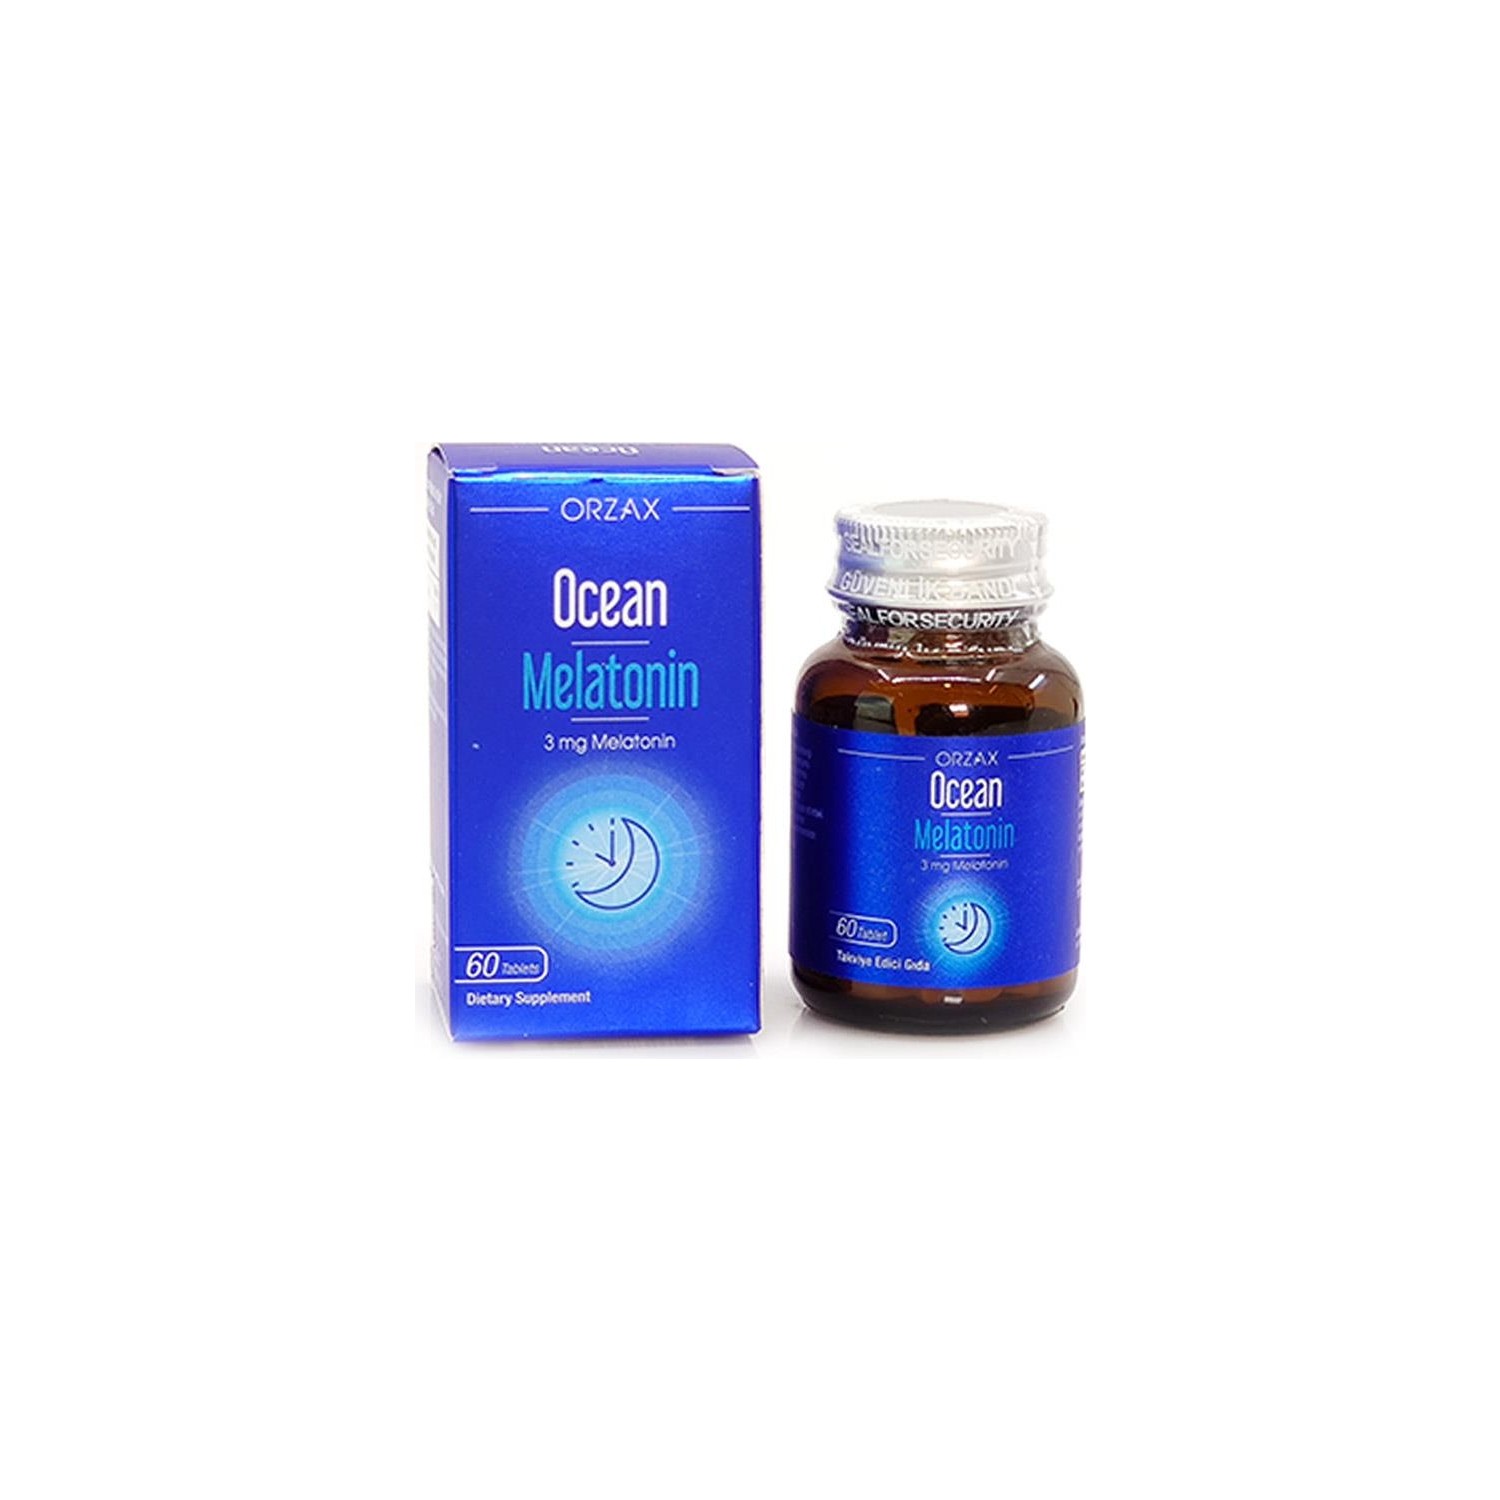 Пищевая добавка Orzax Ocean Melatonin 3 мг, 60 капсул improve sleep melatonin capsules vitamin b6